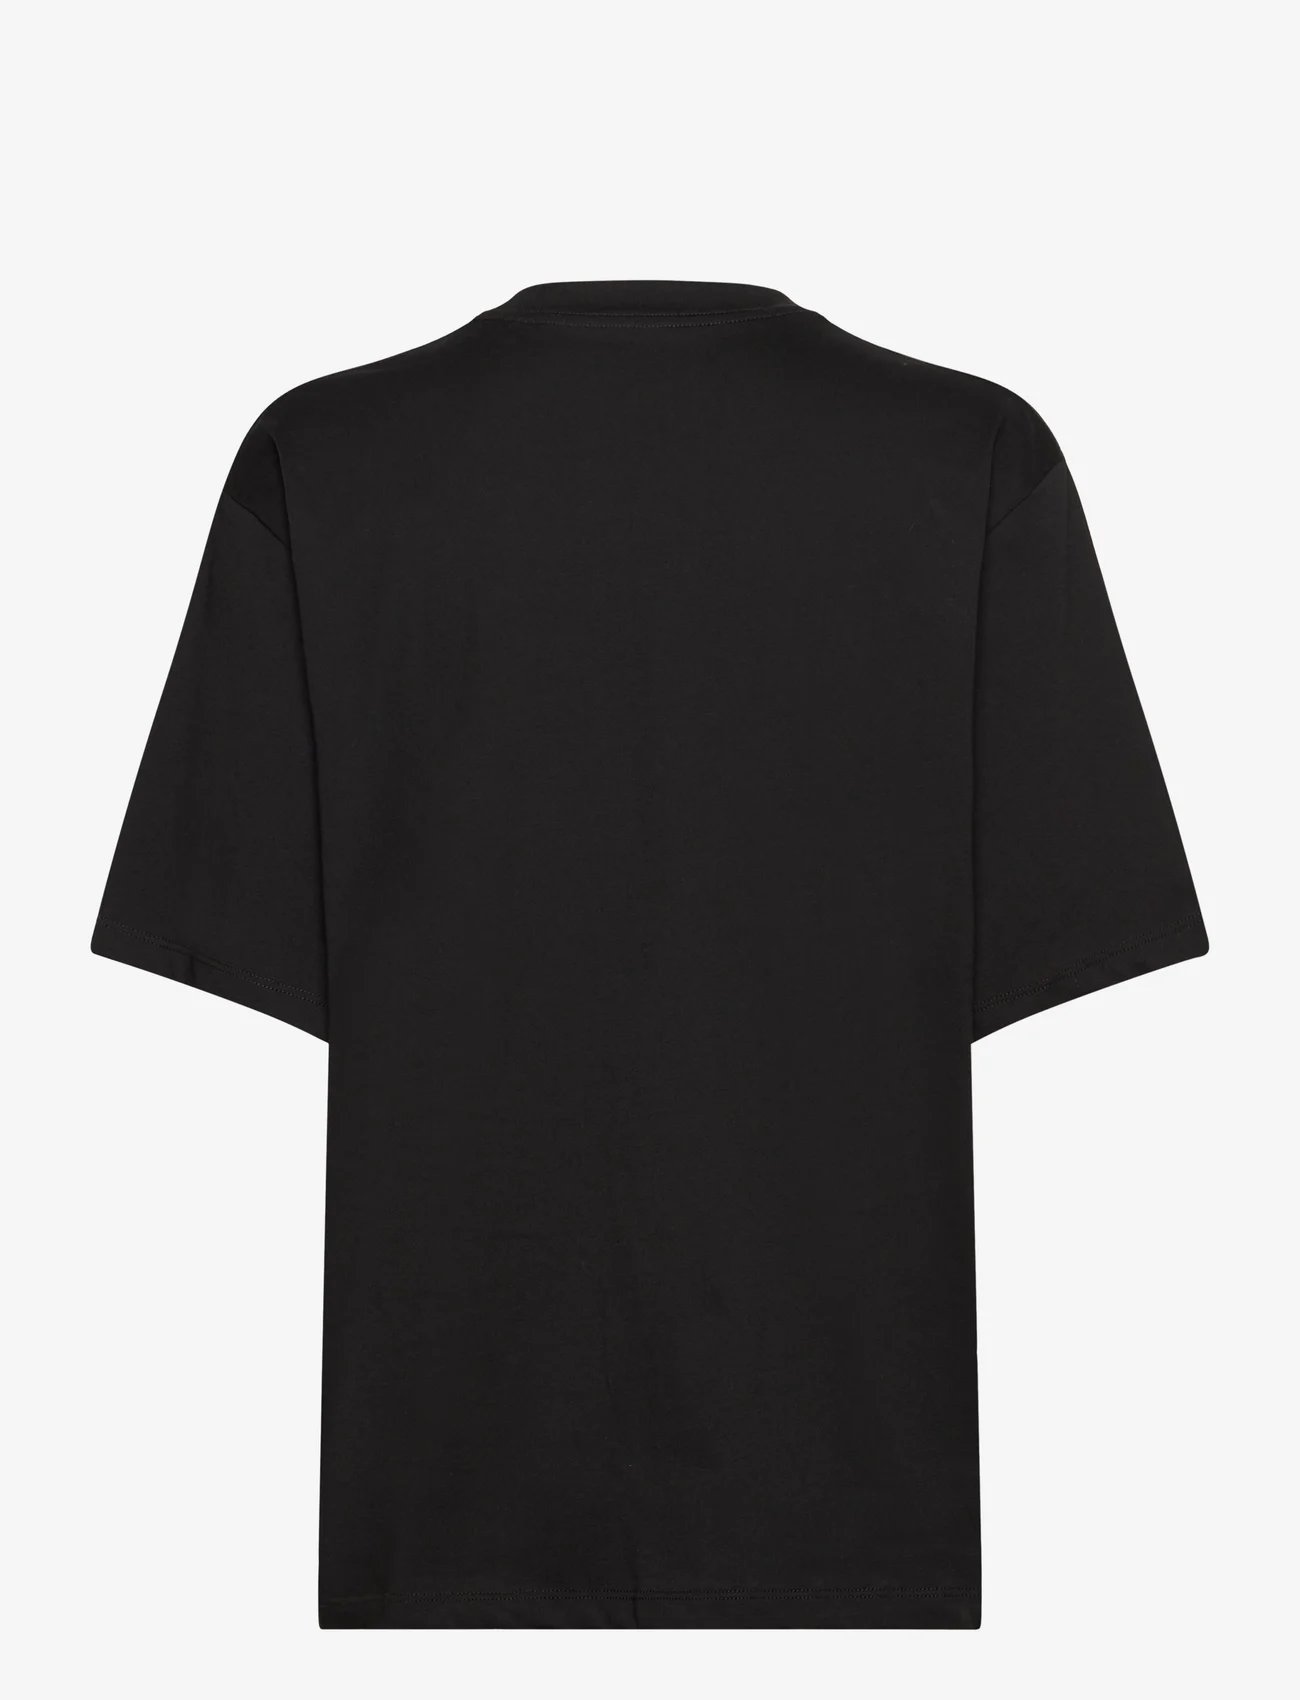 Björn Borg - STUDIO OVERSIZED T-SHIRT - t-shirts - black beauty - 1